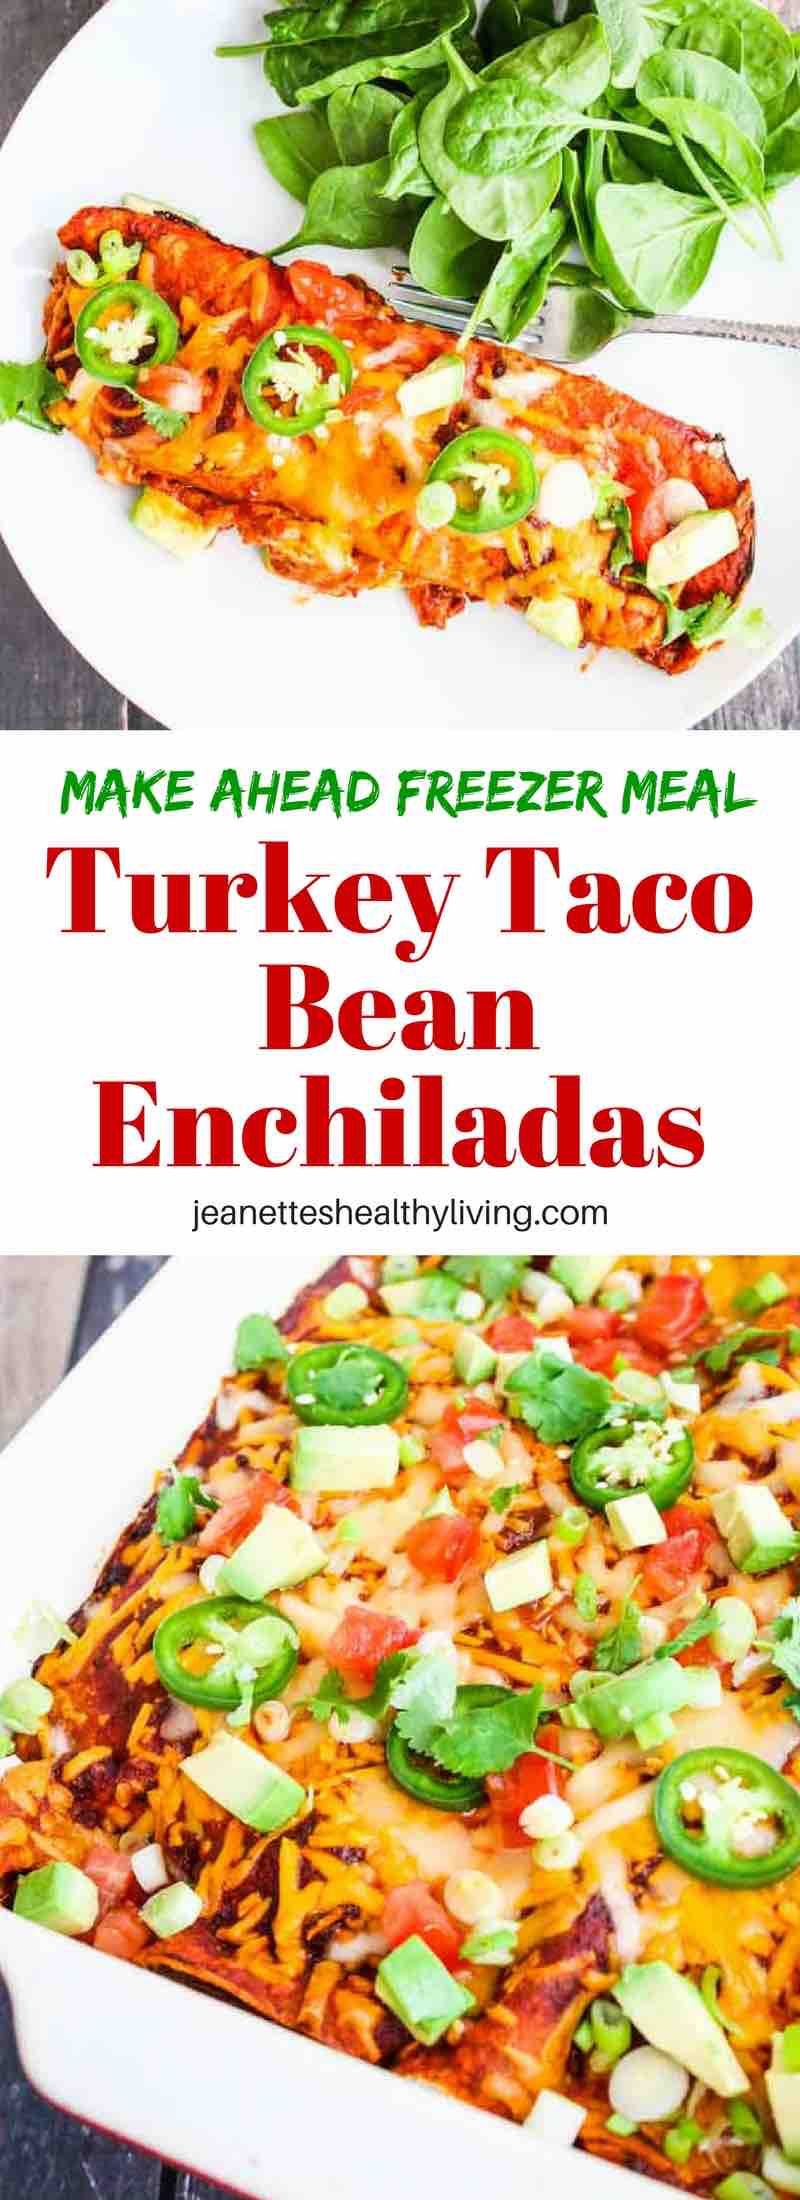 Turkey Taco Bean Enchiladas - freeze ahead of time and bake when ready to eat